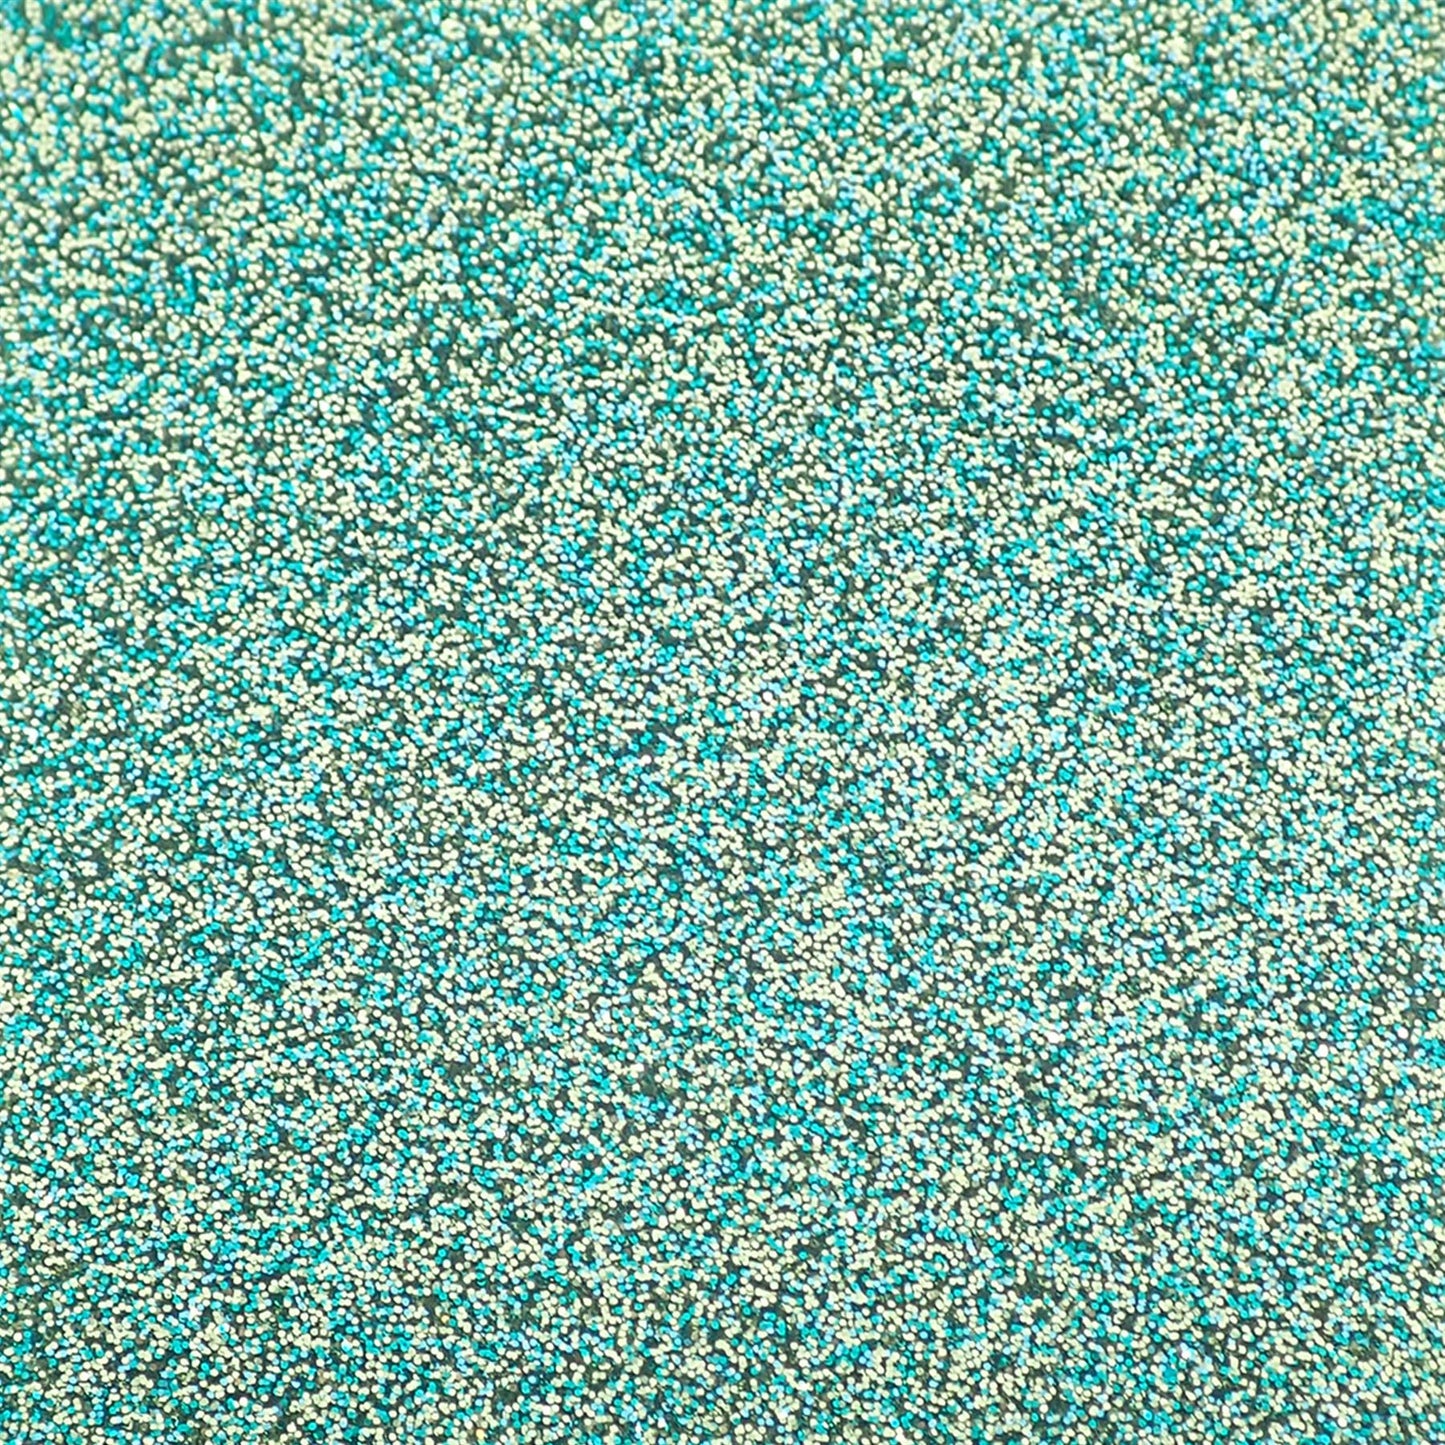 [Incudo] Grass Green Glitter Acrylic Sheet - 1000x600x3mm